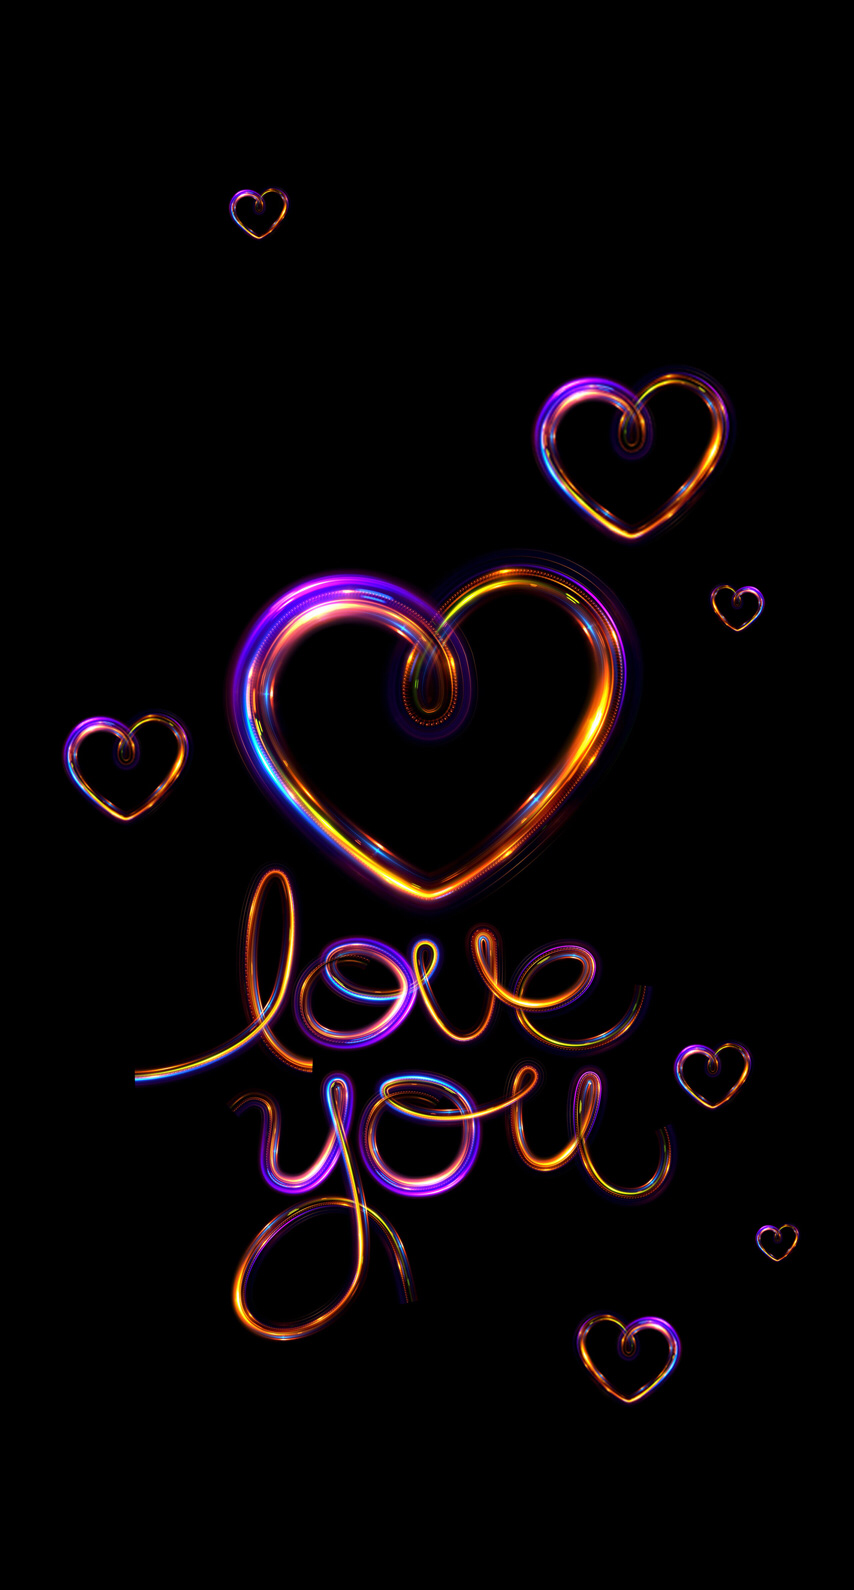 Rhonda Bosarge On Love Wallpaper Heart Image